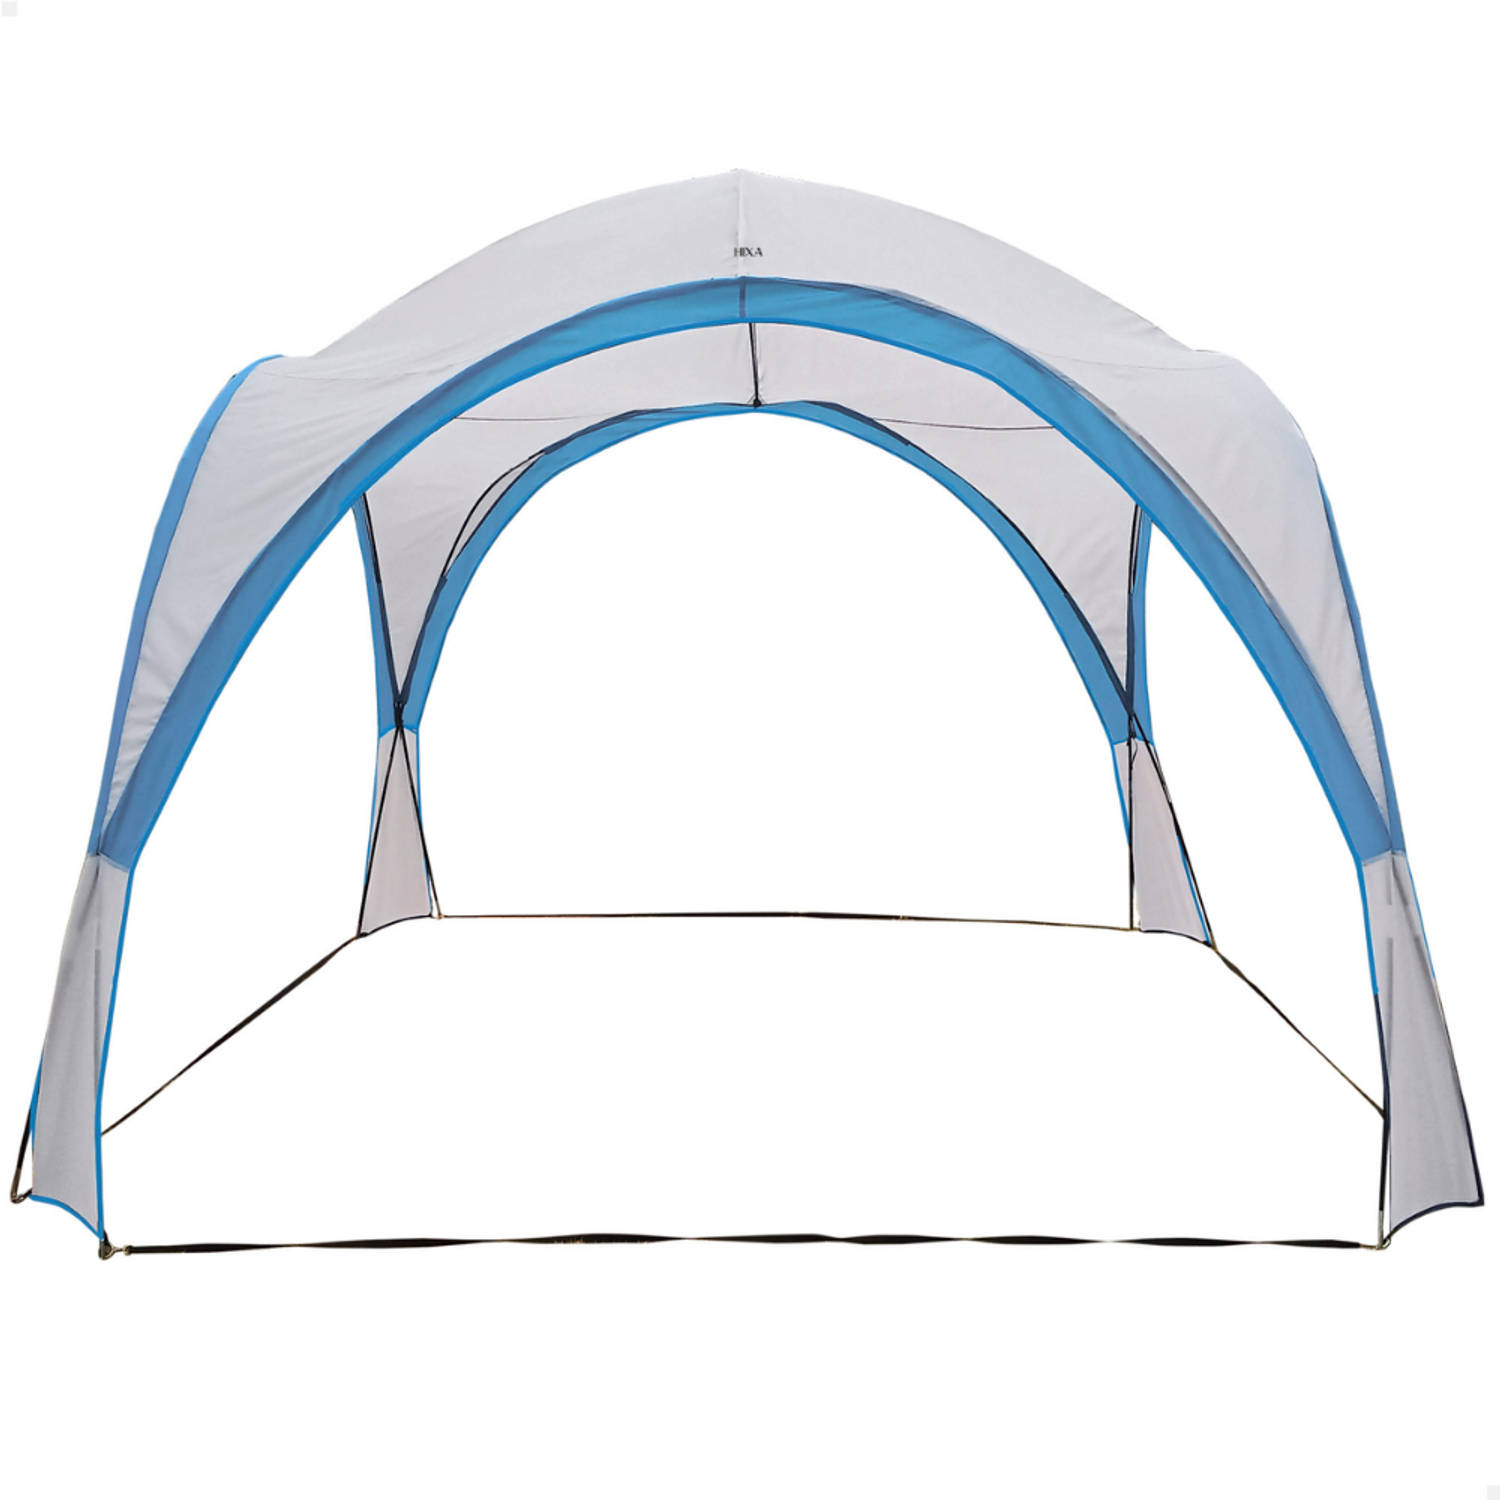 HIXA Aktive Partytent Tent Event Shelter Overzet Wit Blauw 320x320x260cm